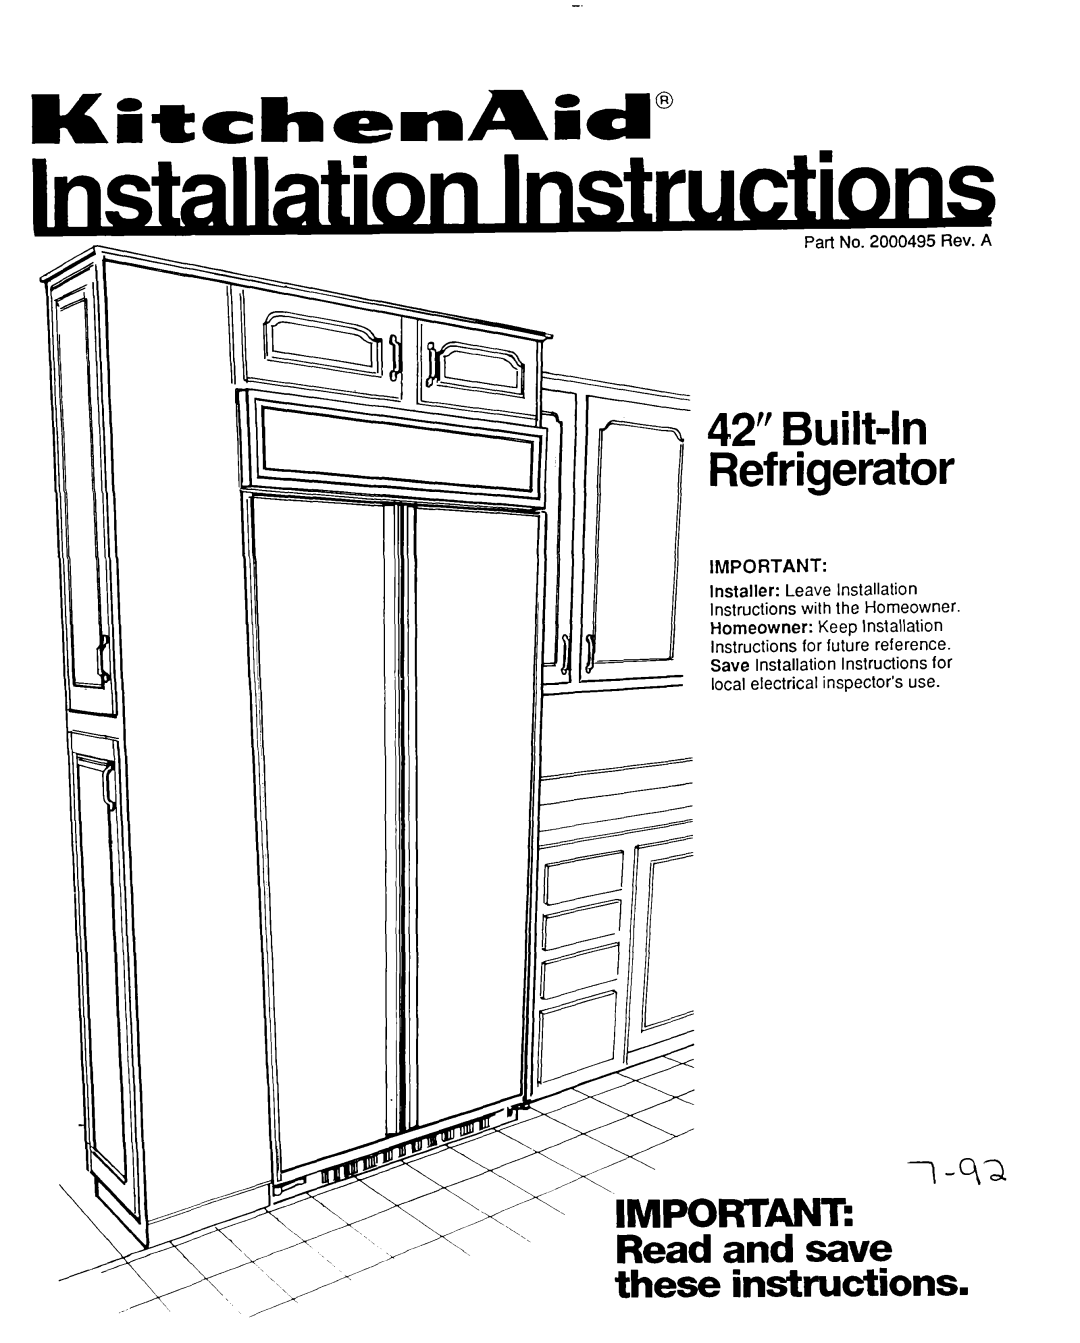 KitchenAid 2000495 installation instructions IttchenAiid”, 42” Built-In Refrigerator 